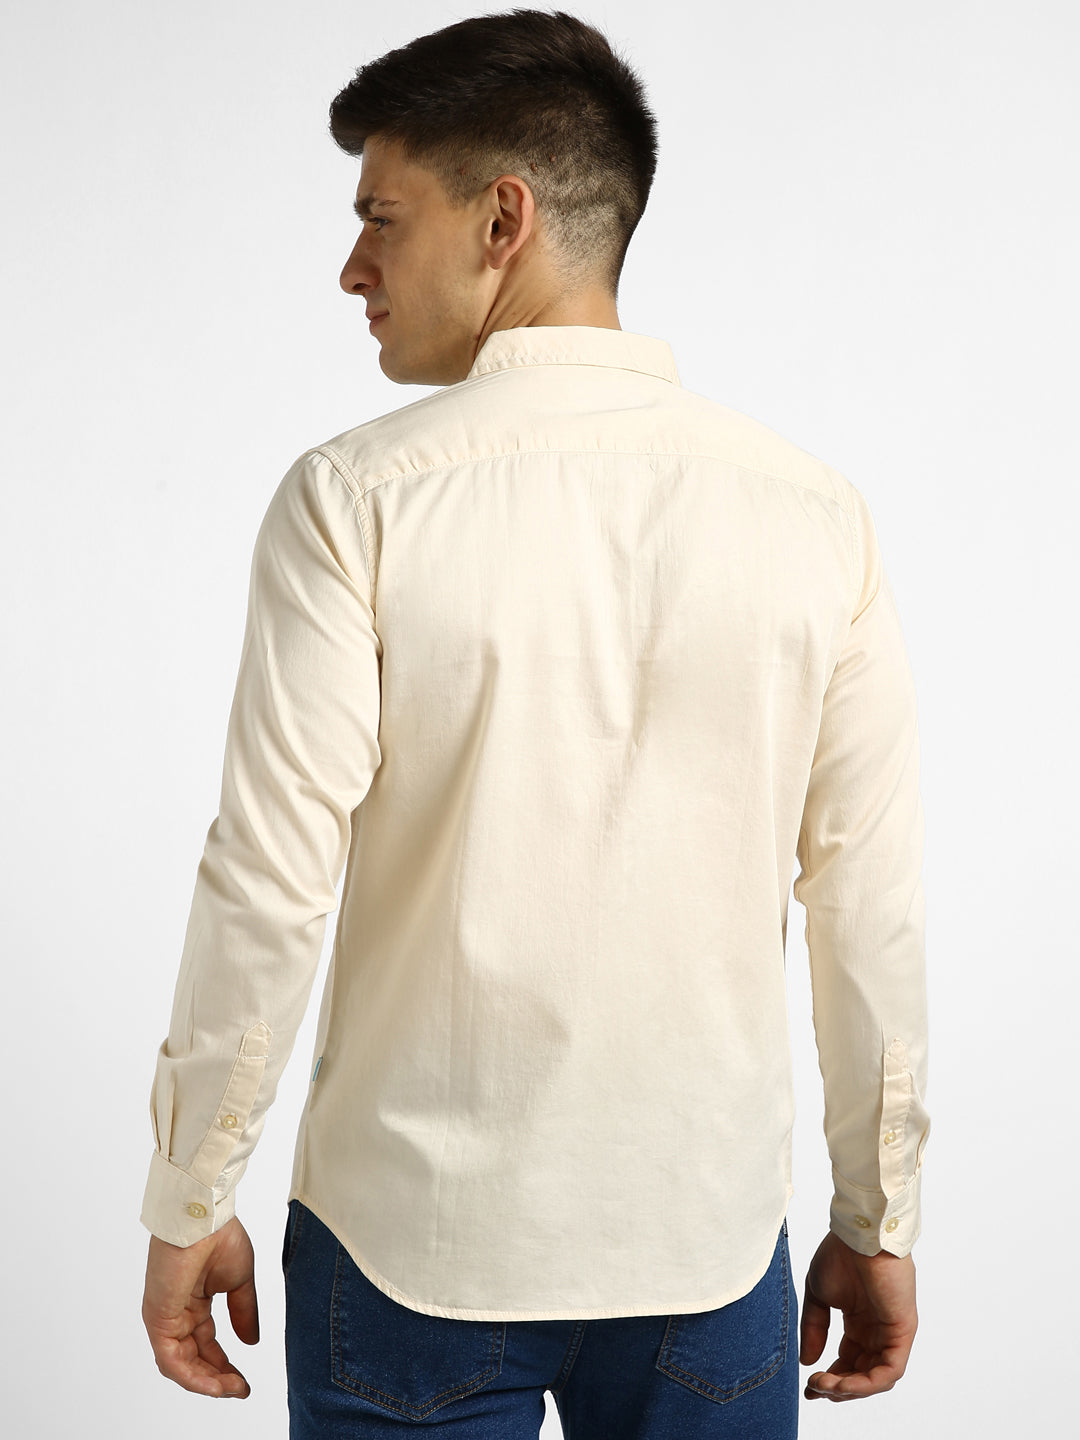 Urbano Fashion Men's Beige Cotton Full Sleeve Slim Fit Casual Solid Shirt